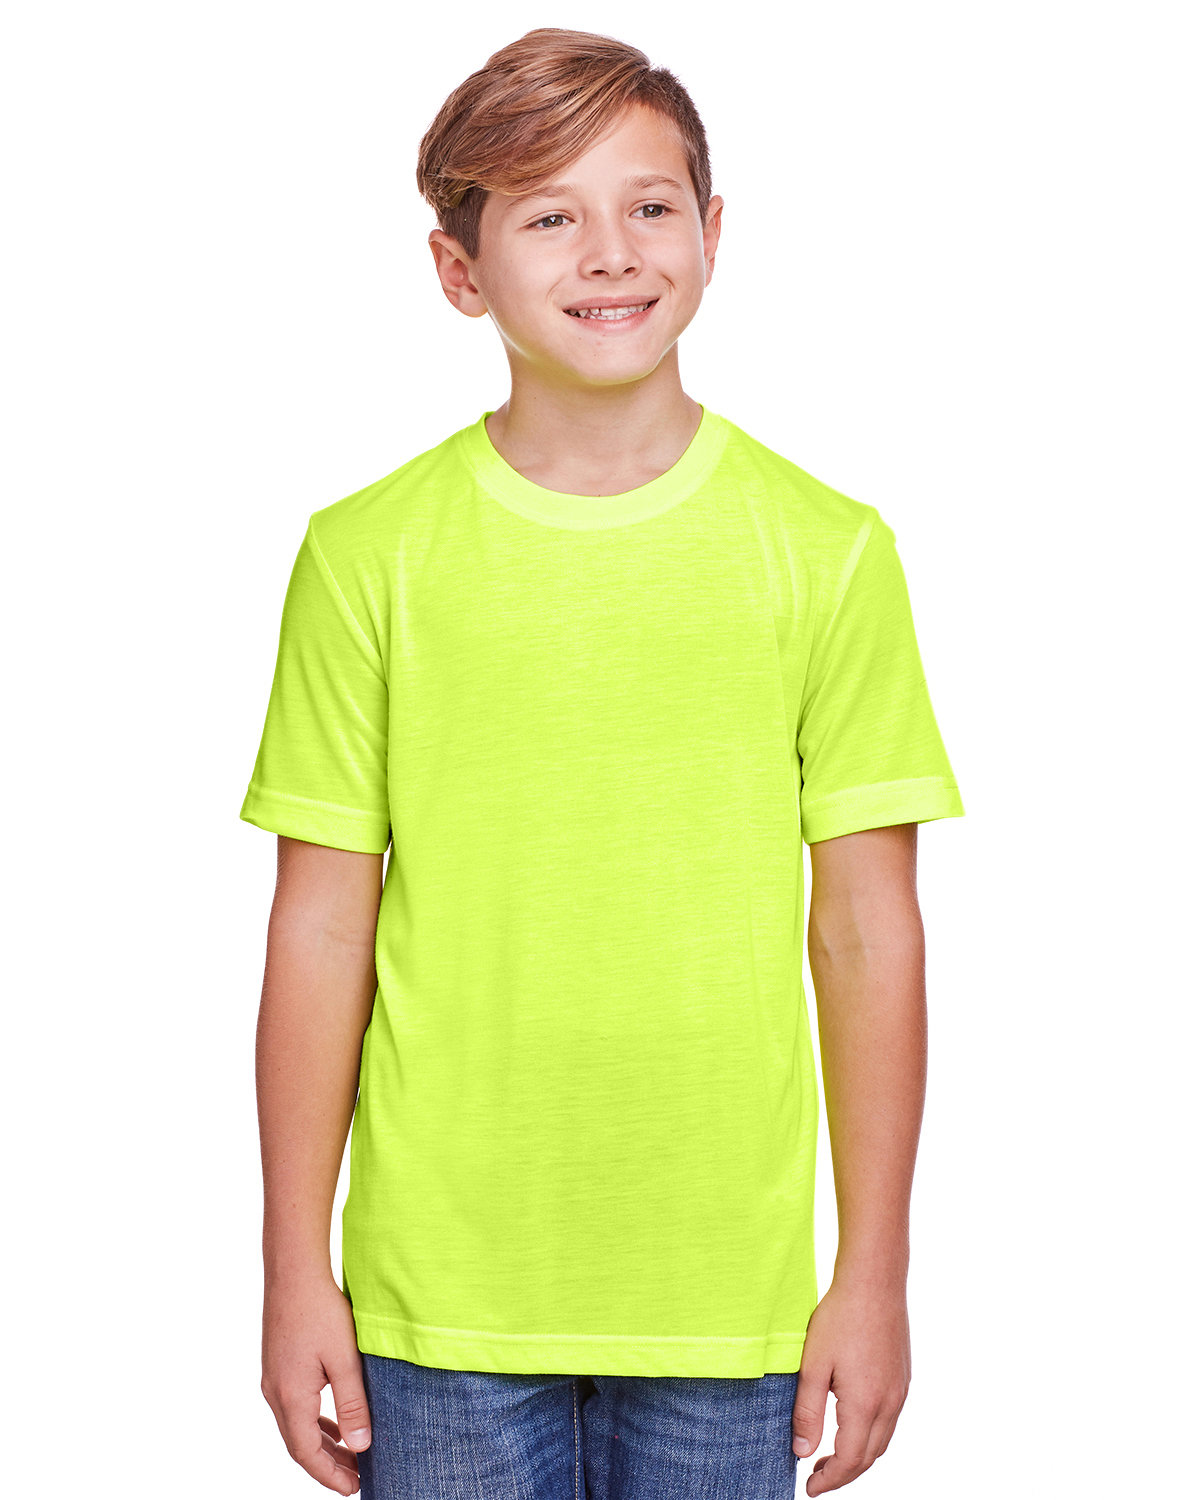 Core365 Youth Fusion ChromaSoft Performance T-Shirt SAFETY YELLOW 